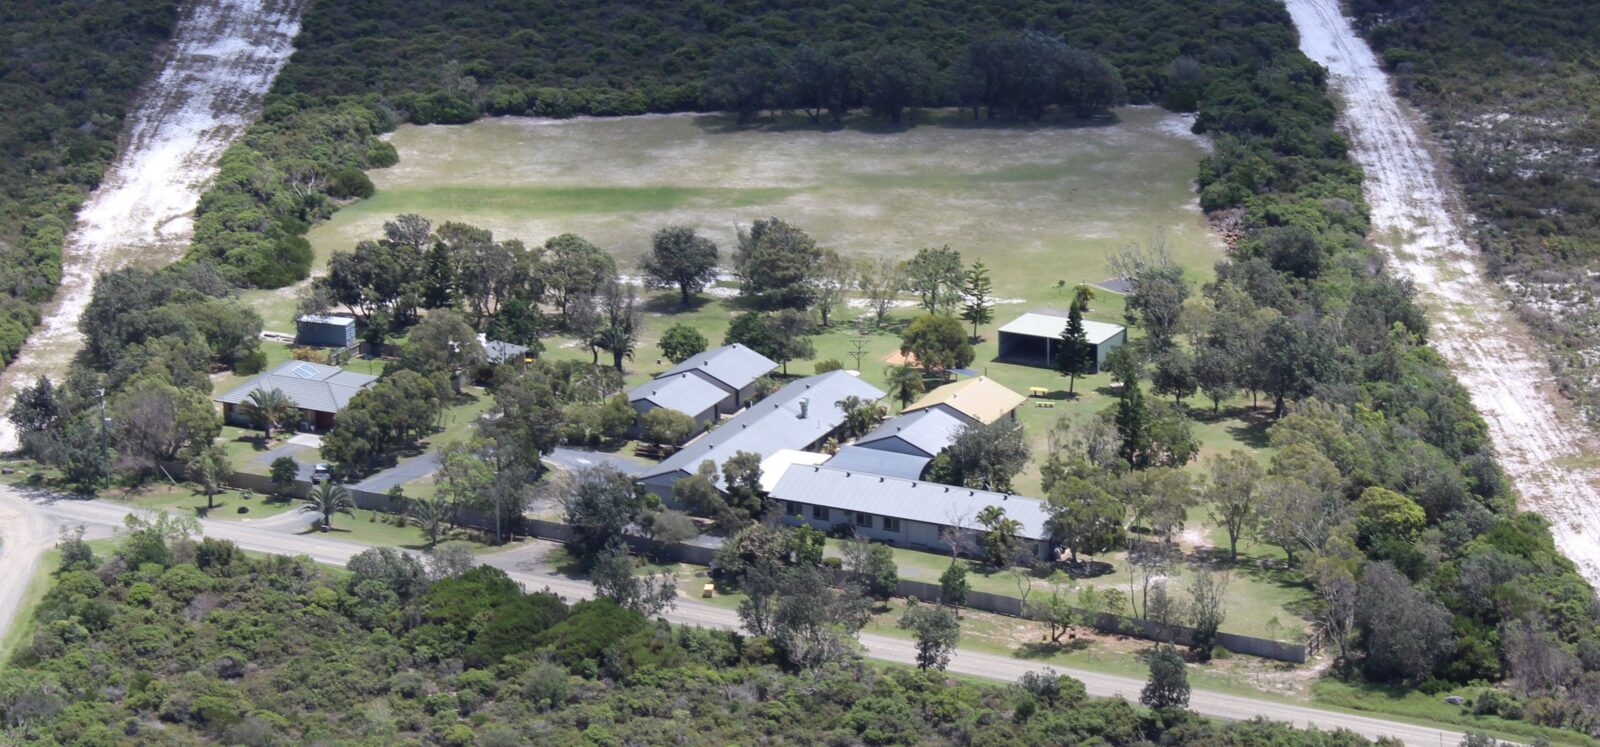 Aerial view of Camp Drewe